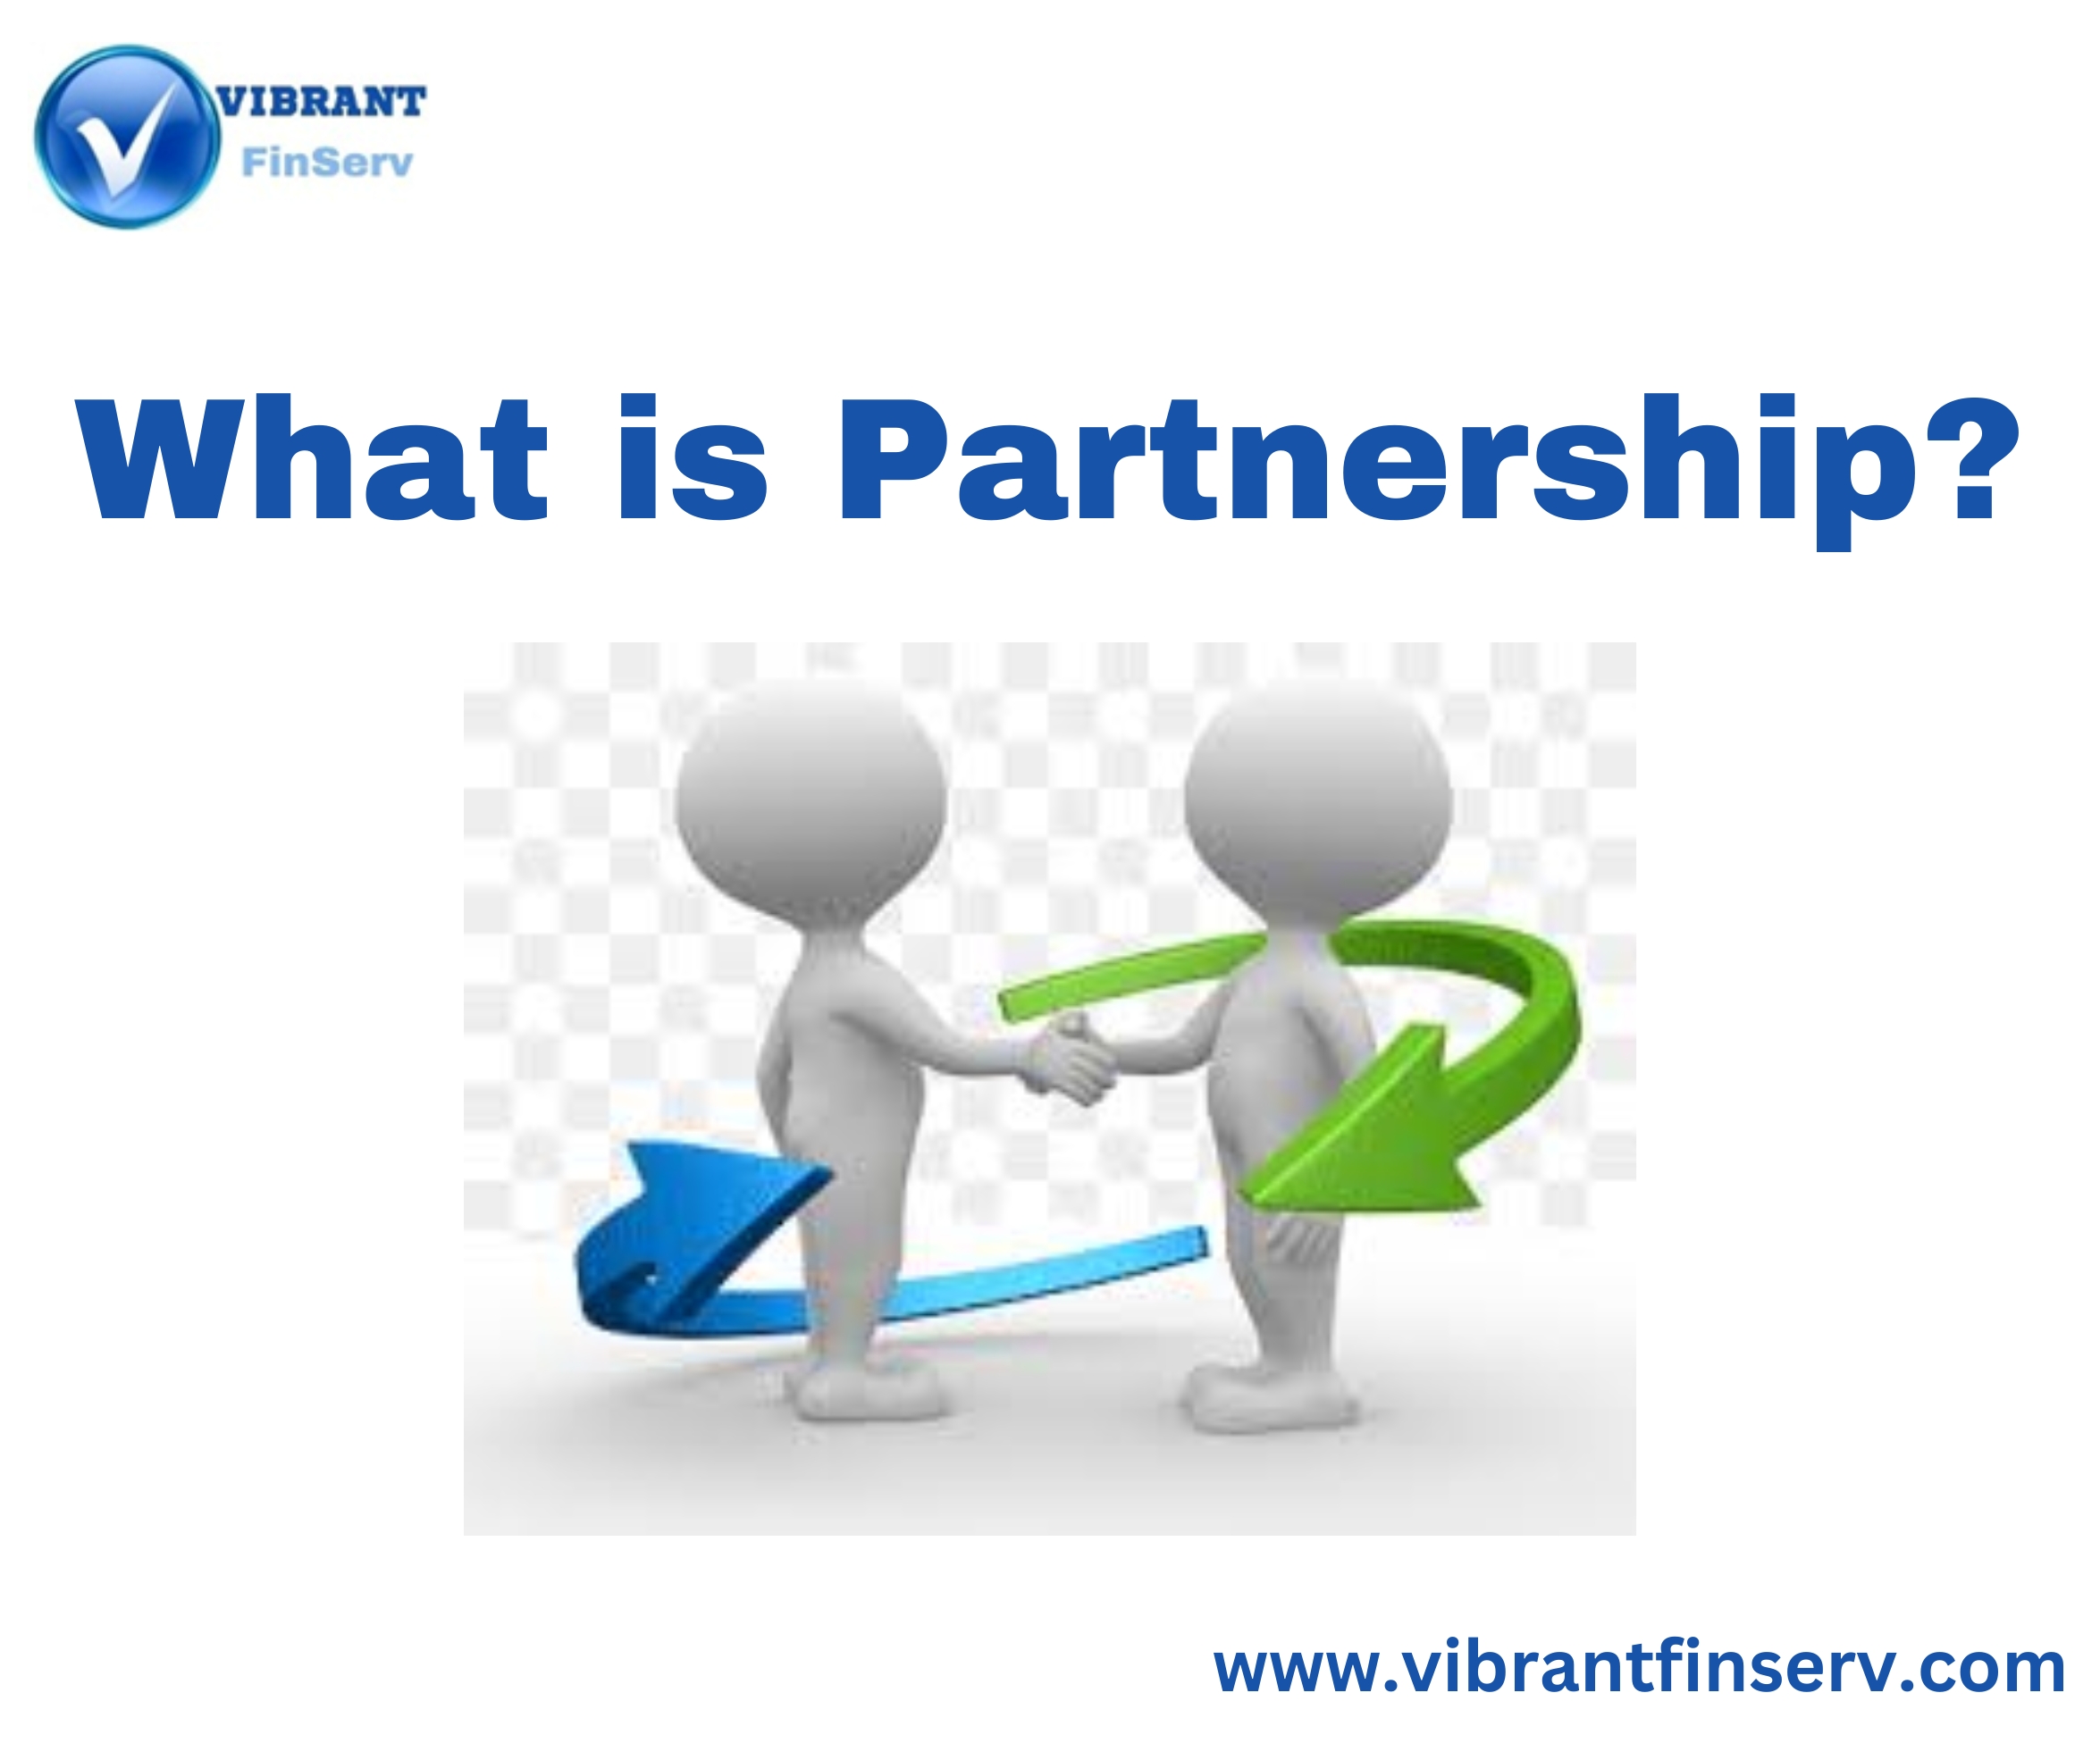 Definition of Partnership